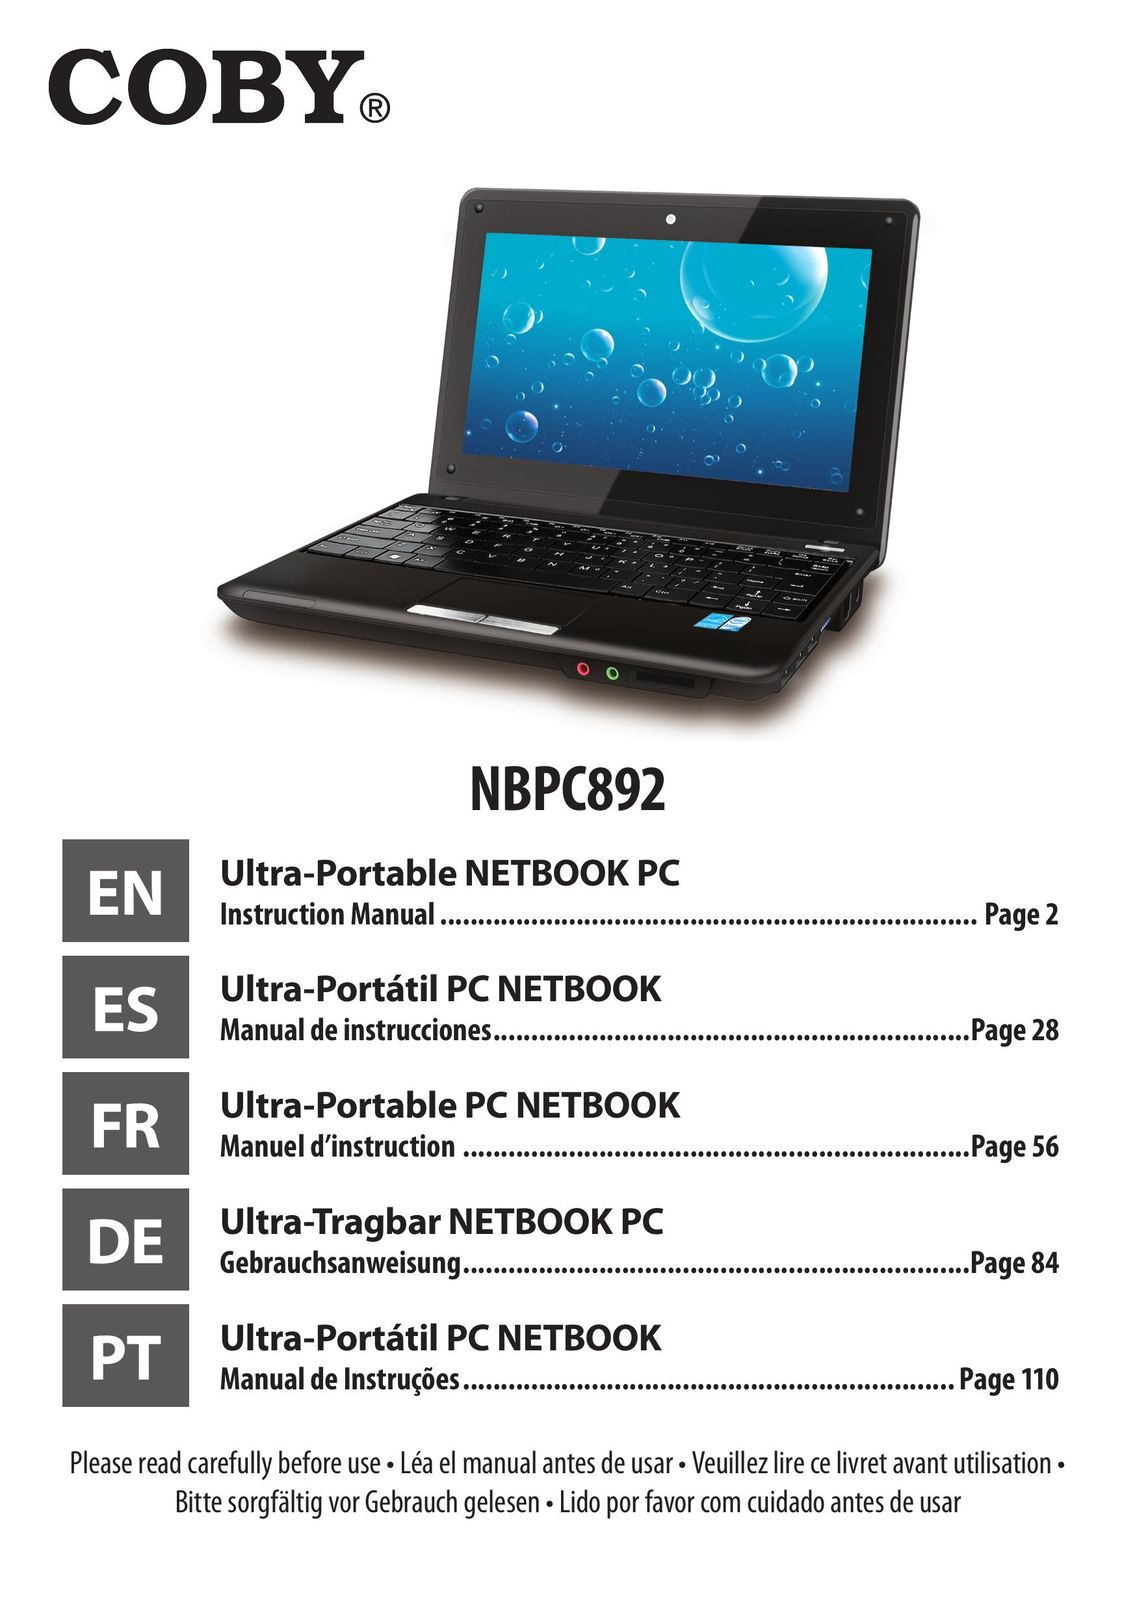 COBY electronic NBPC892 Laptop User Manual